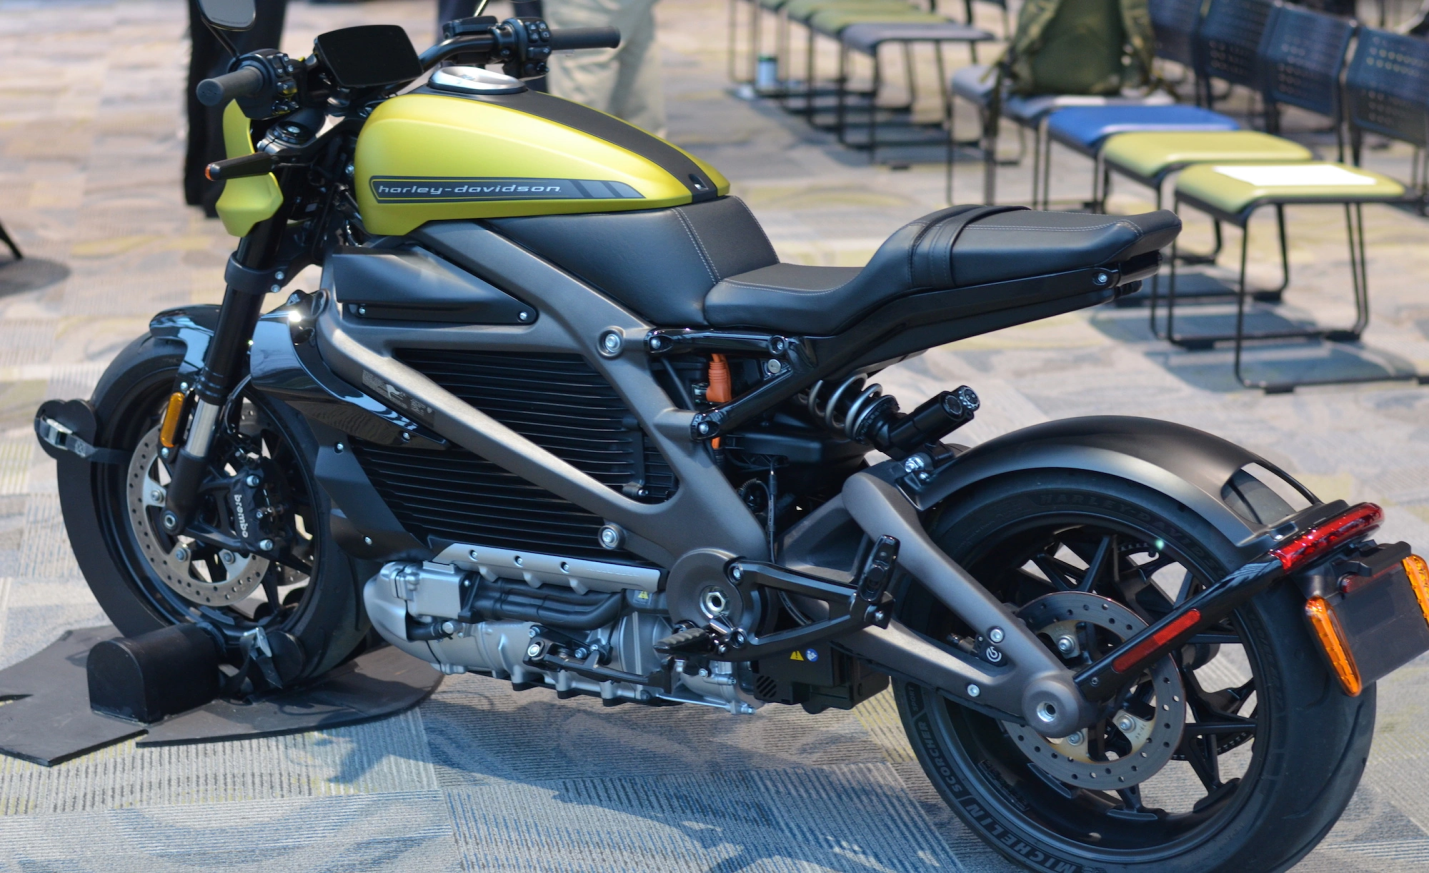 Electric motorcycle development speeds up